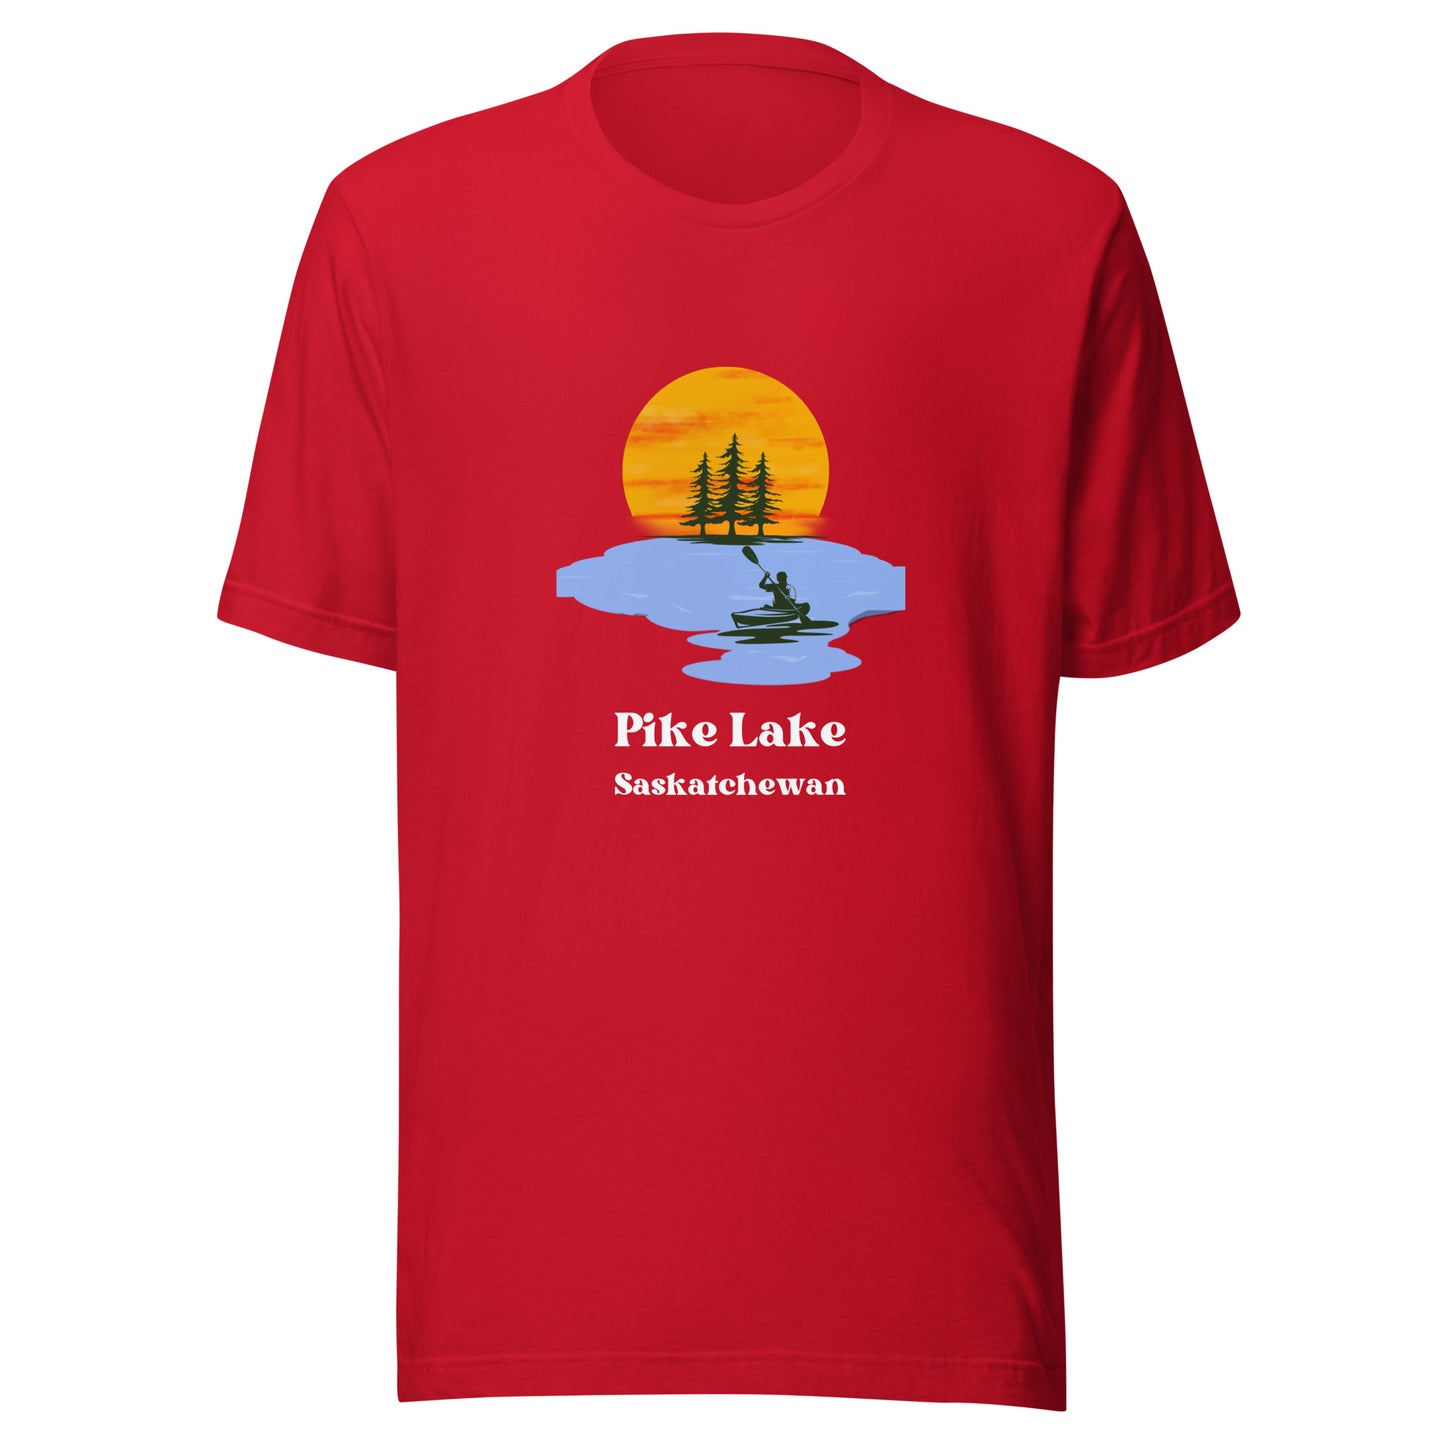 Pike Lake, SK - T-Shirt Kayak